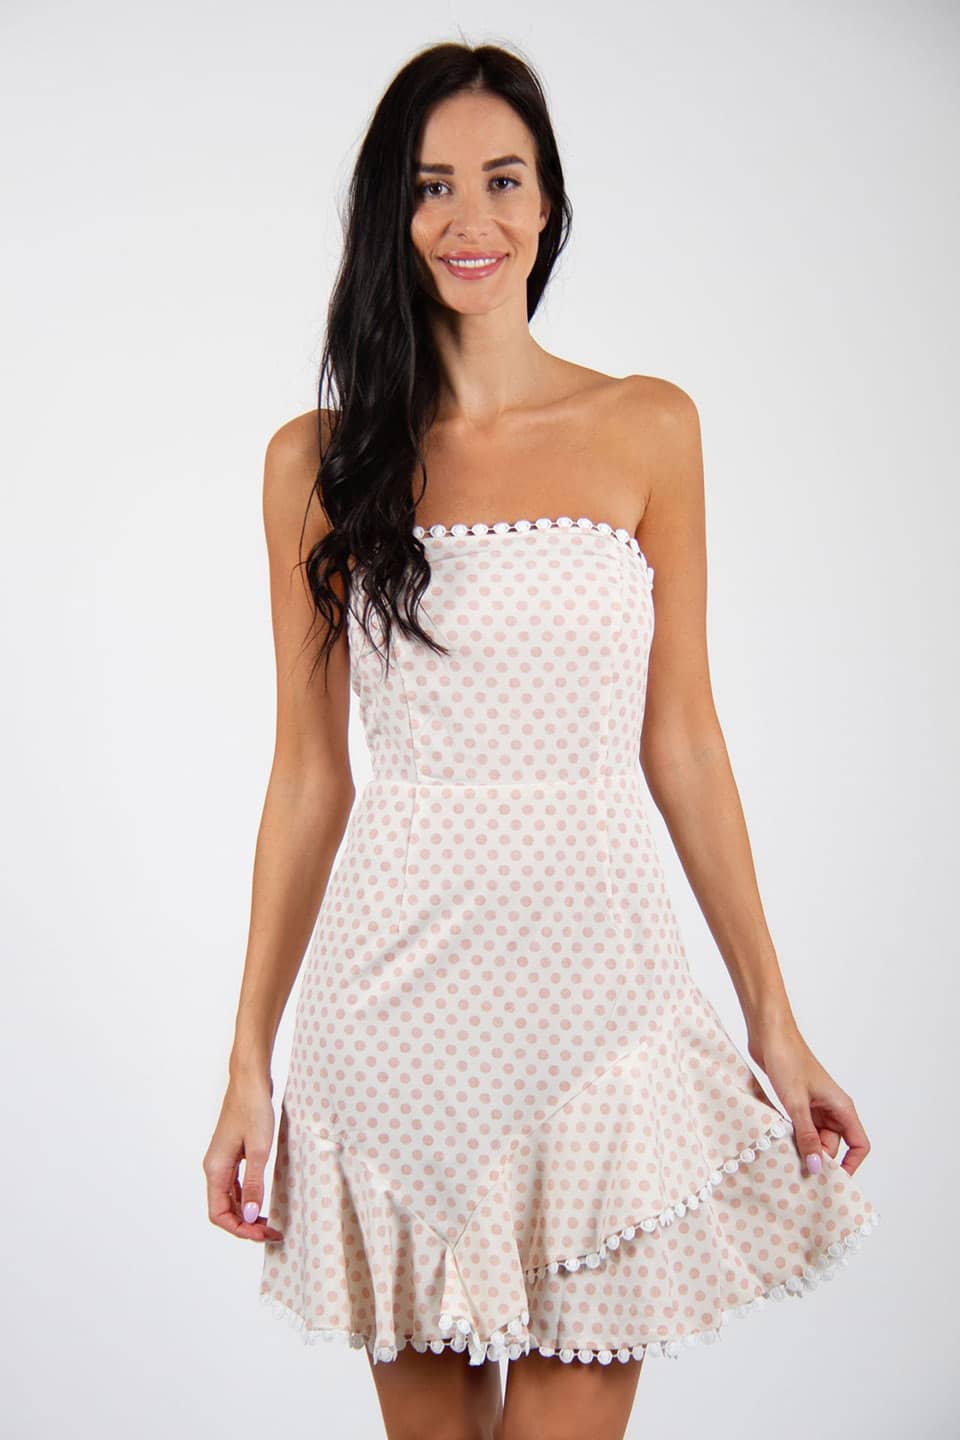 Dot printed, off-shoulder mini dress in white color. Model front posing